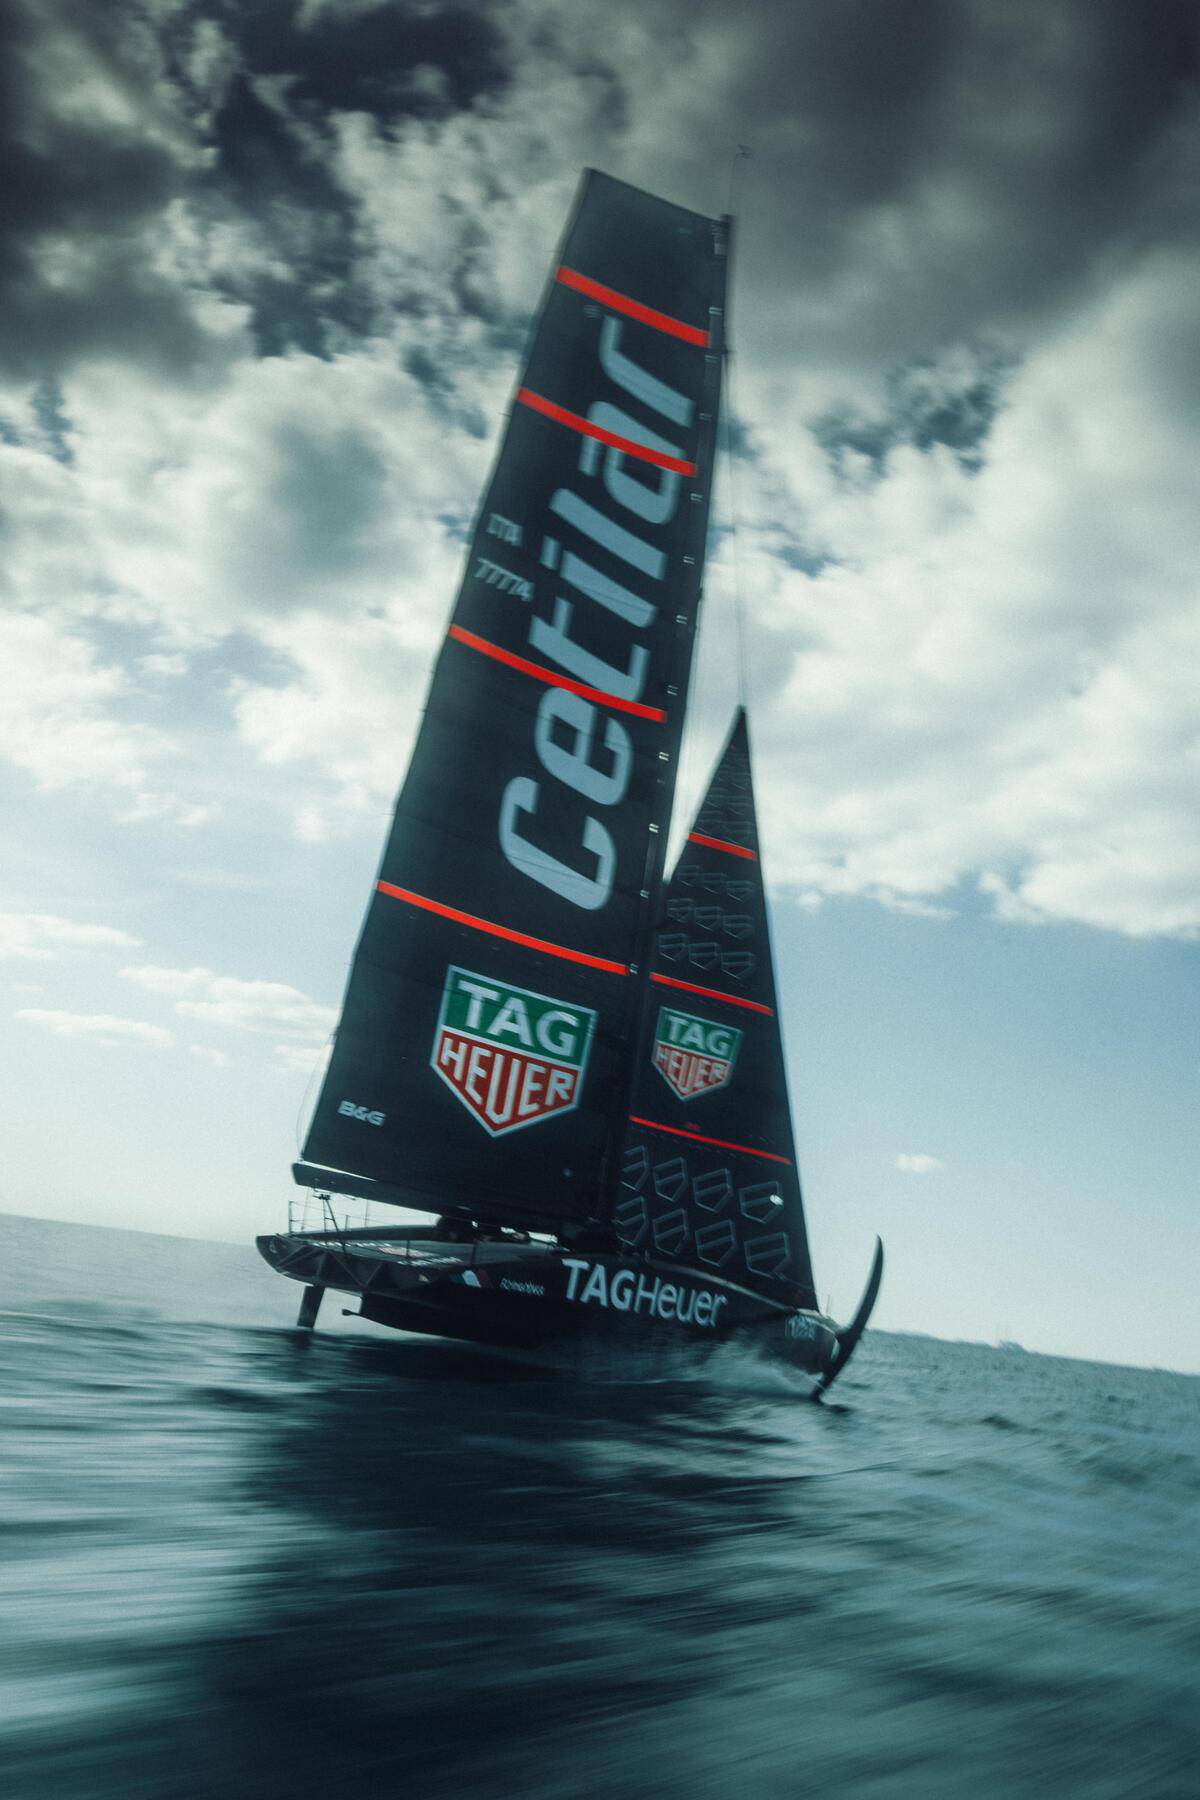 Set sail in style: meet the new TAG Heuer Carrera Skipper